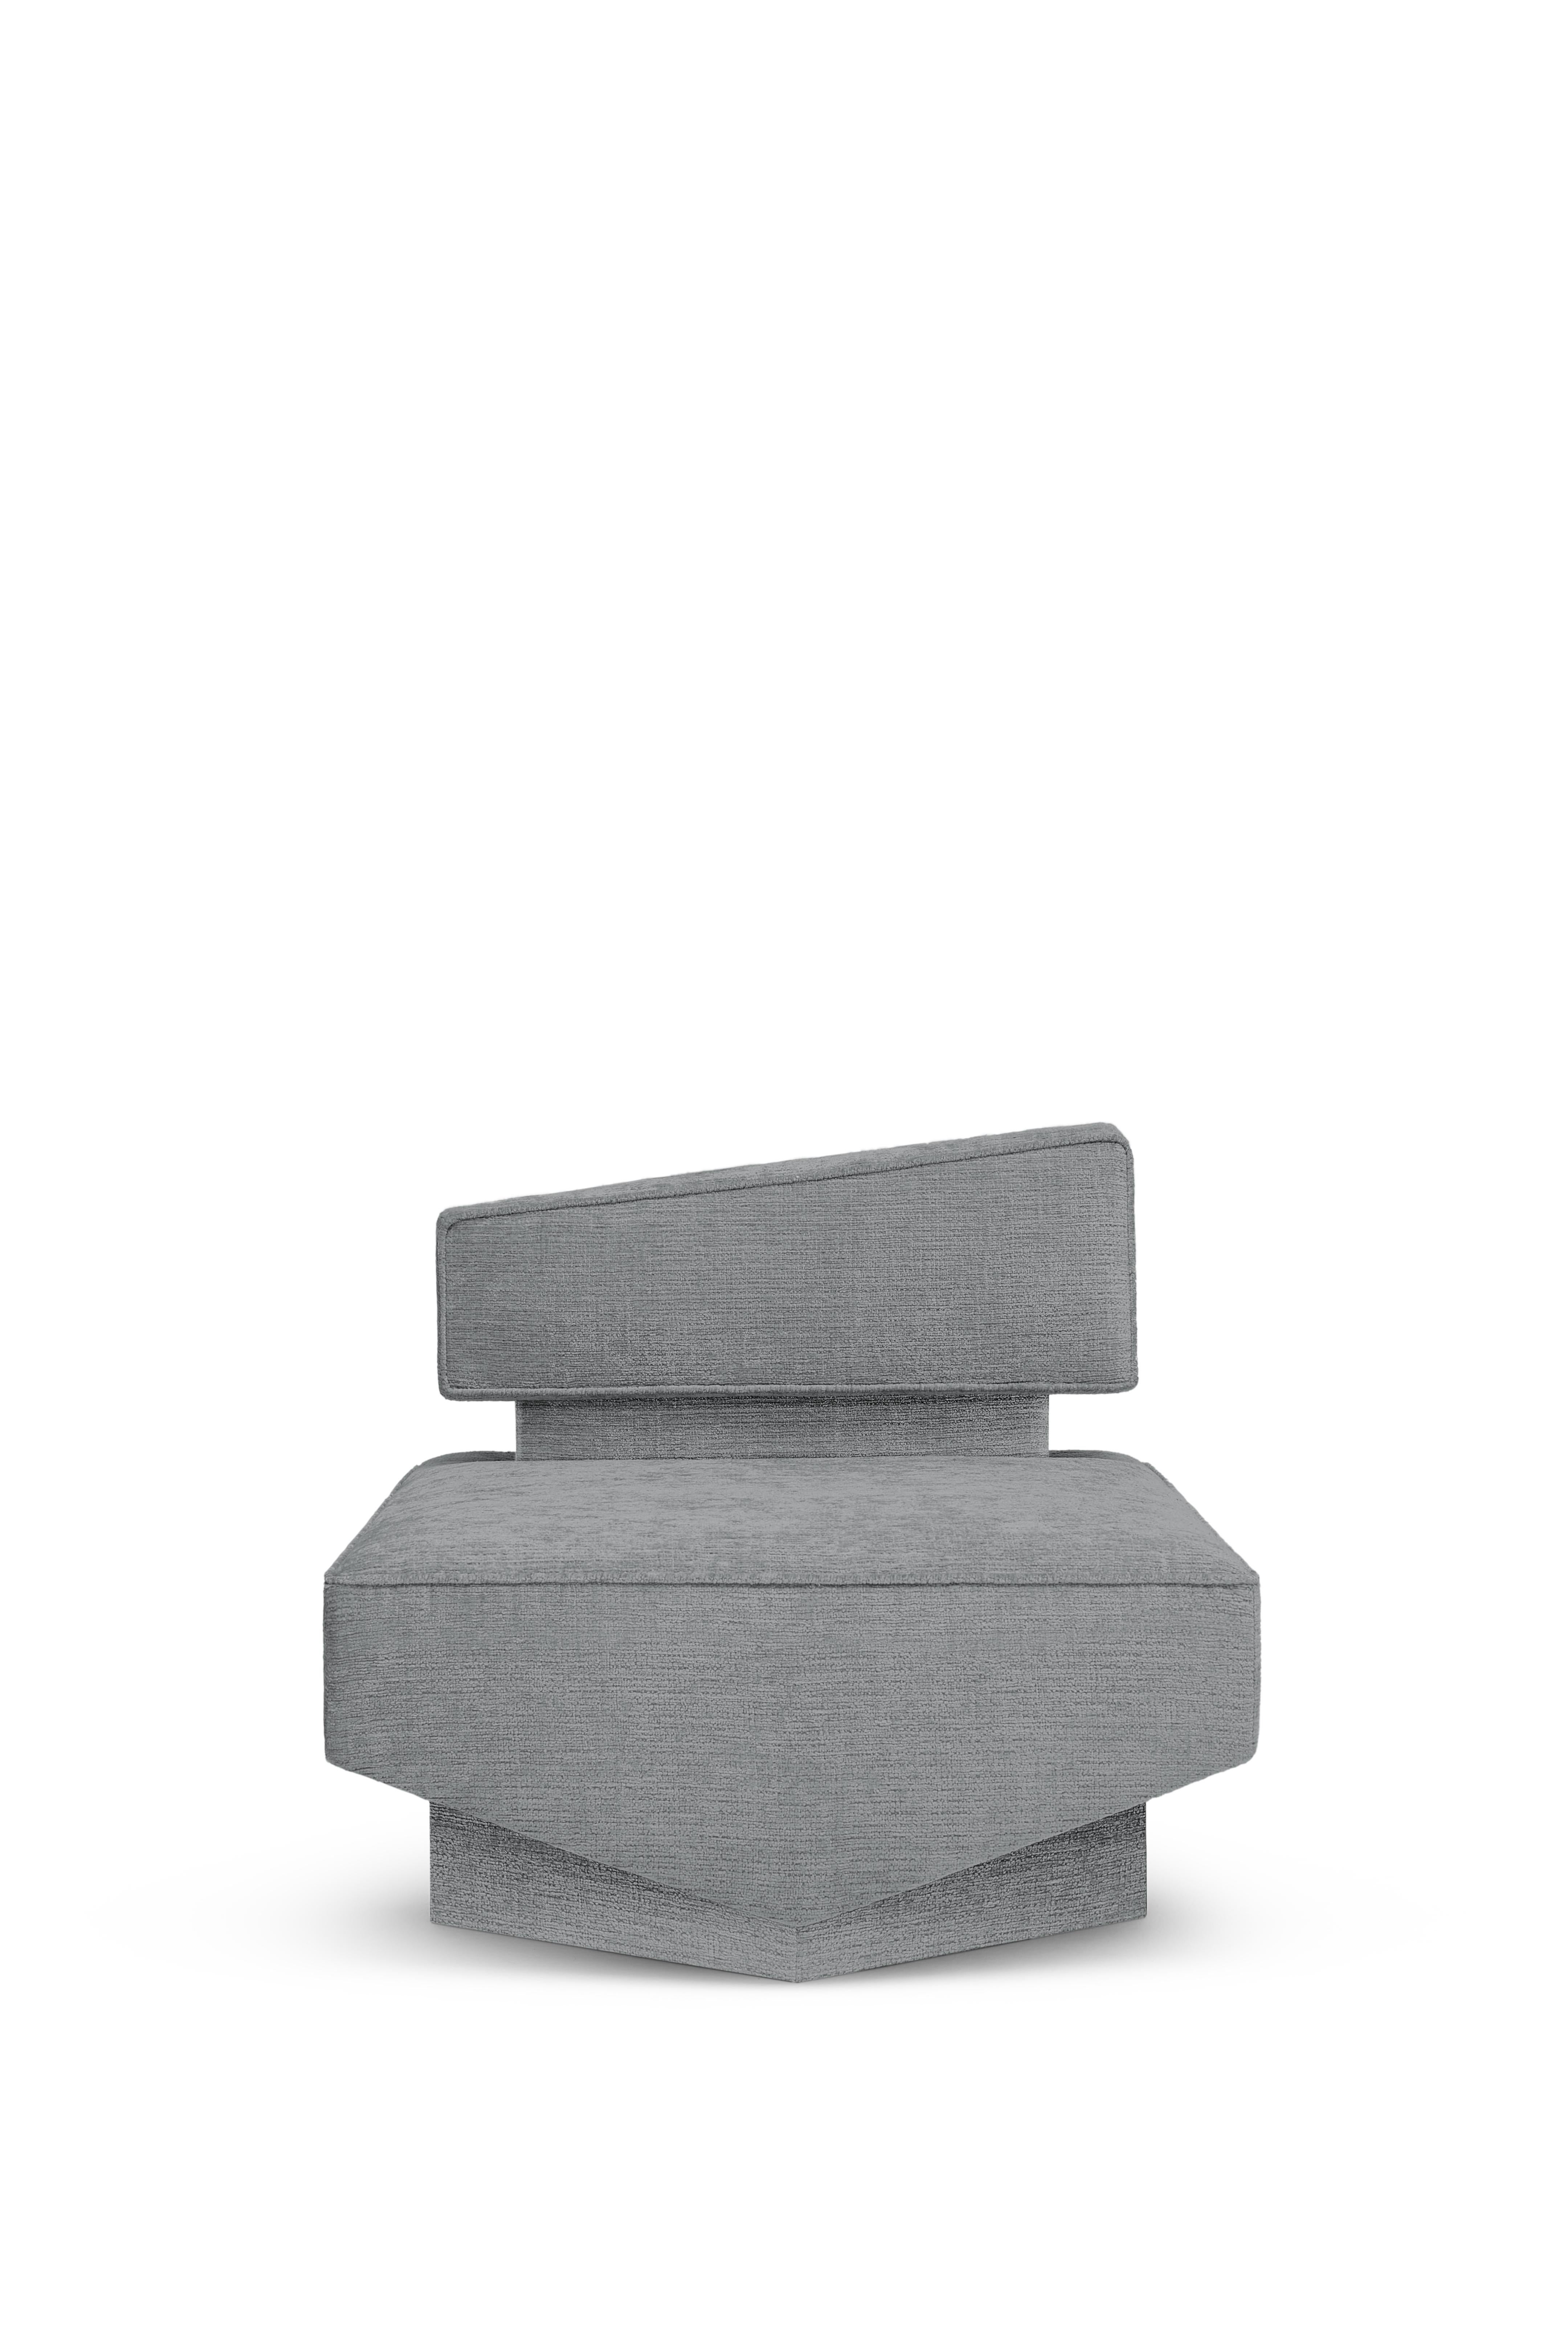 Wool Contemporary Armchair 'Divergent' by Marta Delgado, Walnut, Gray For Sale